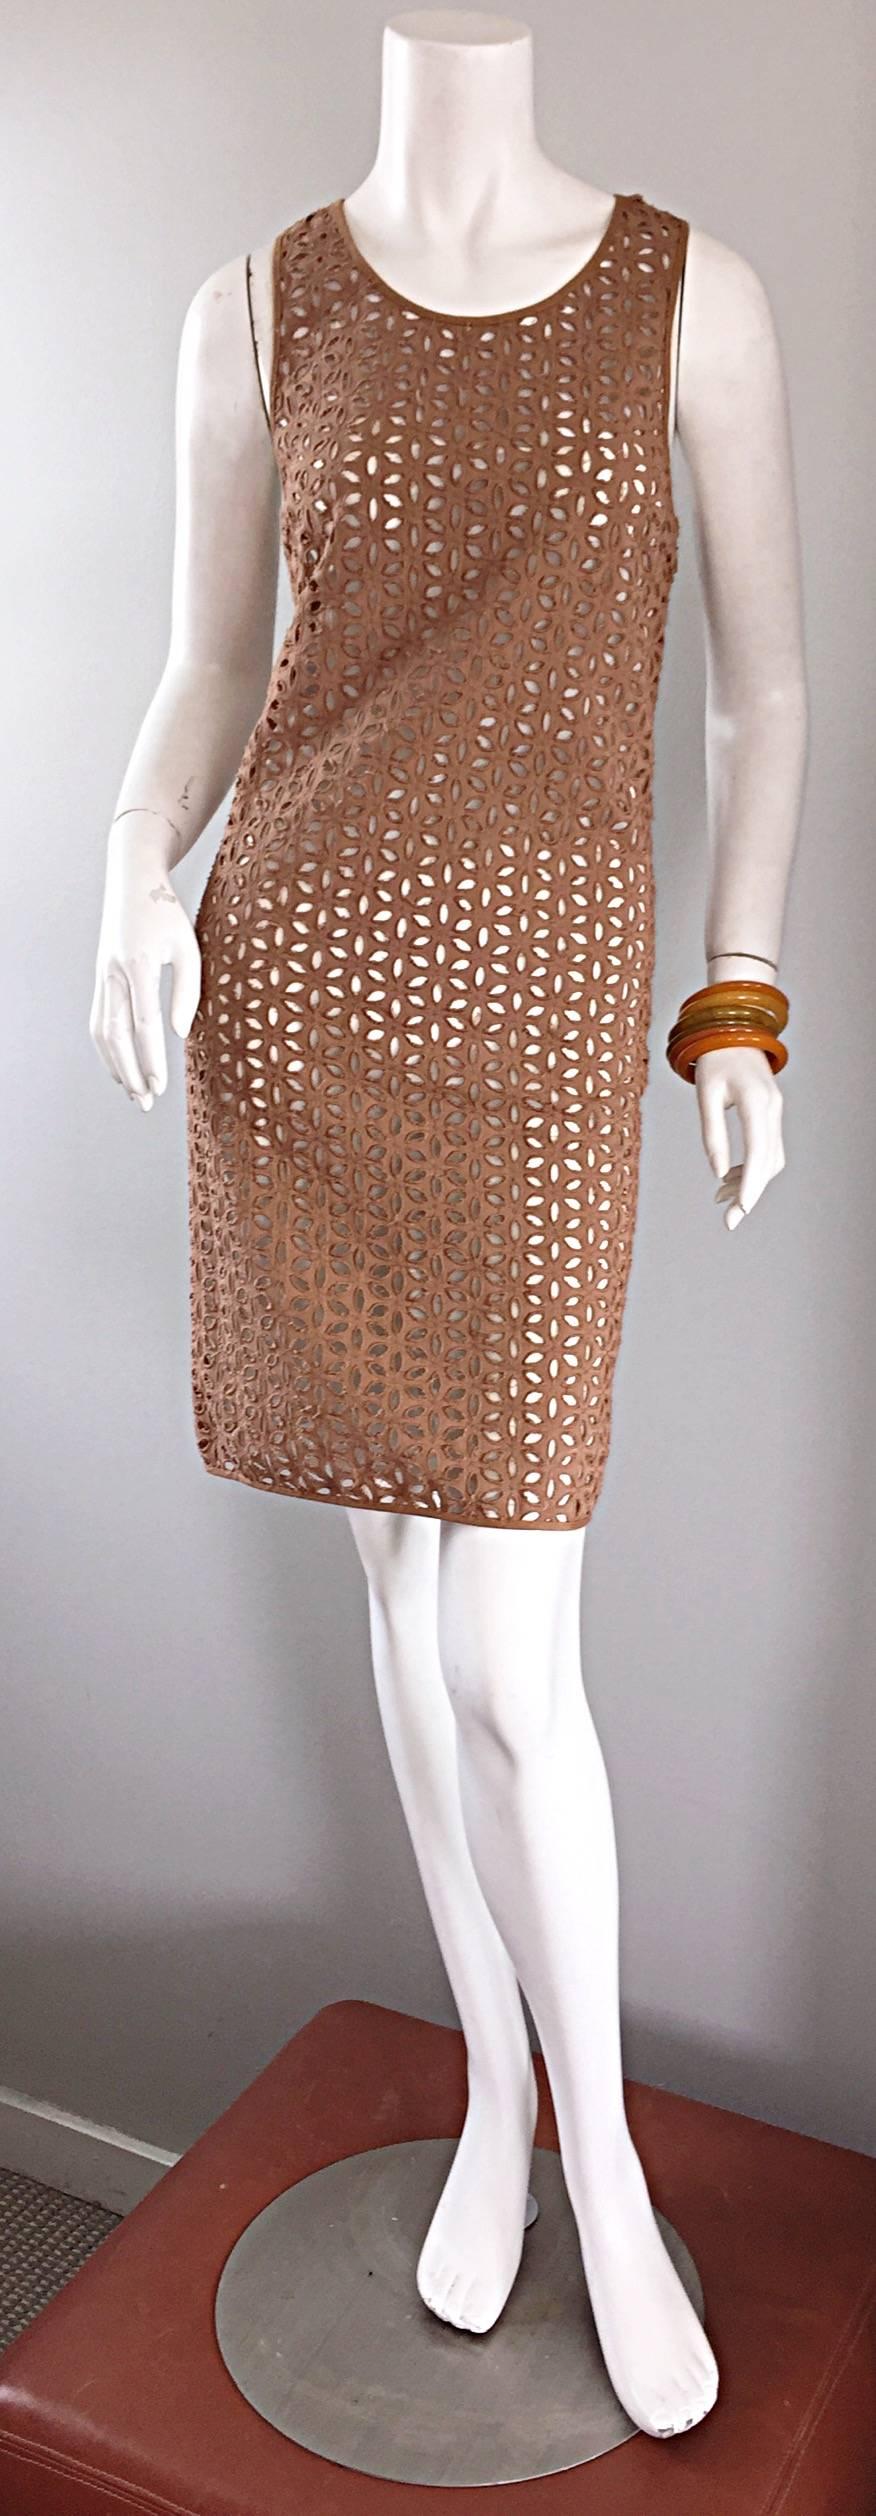 Derek Lam Chic Taupe Light Brown Crochet Cut - Out Dress & Slip For Sale 2